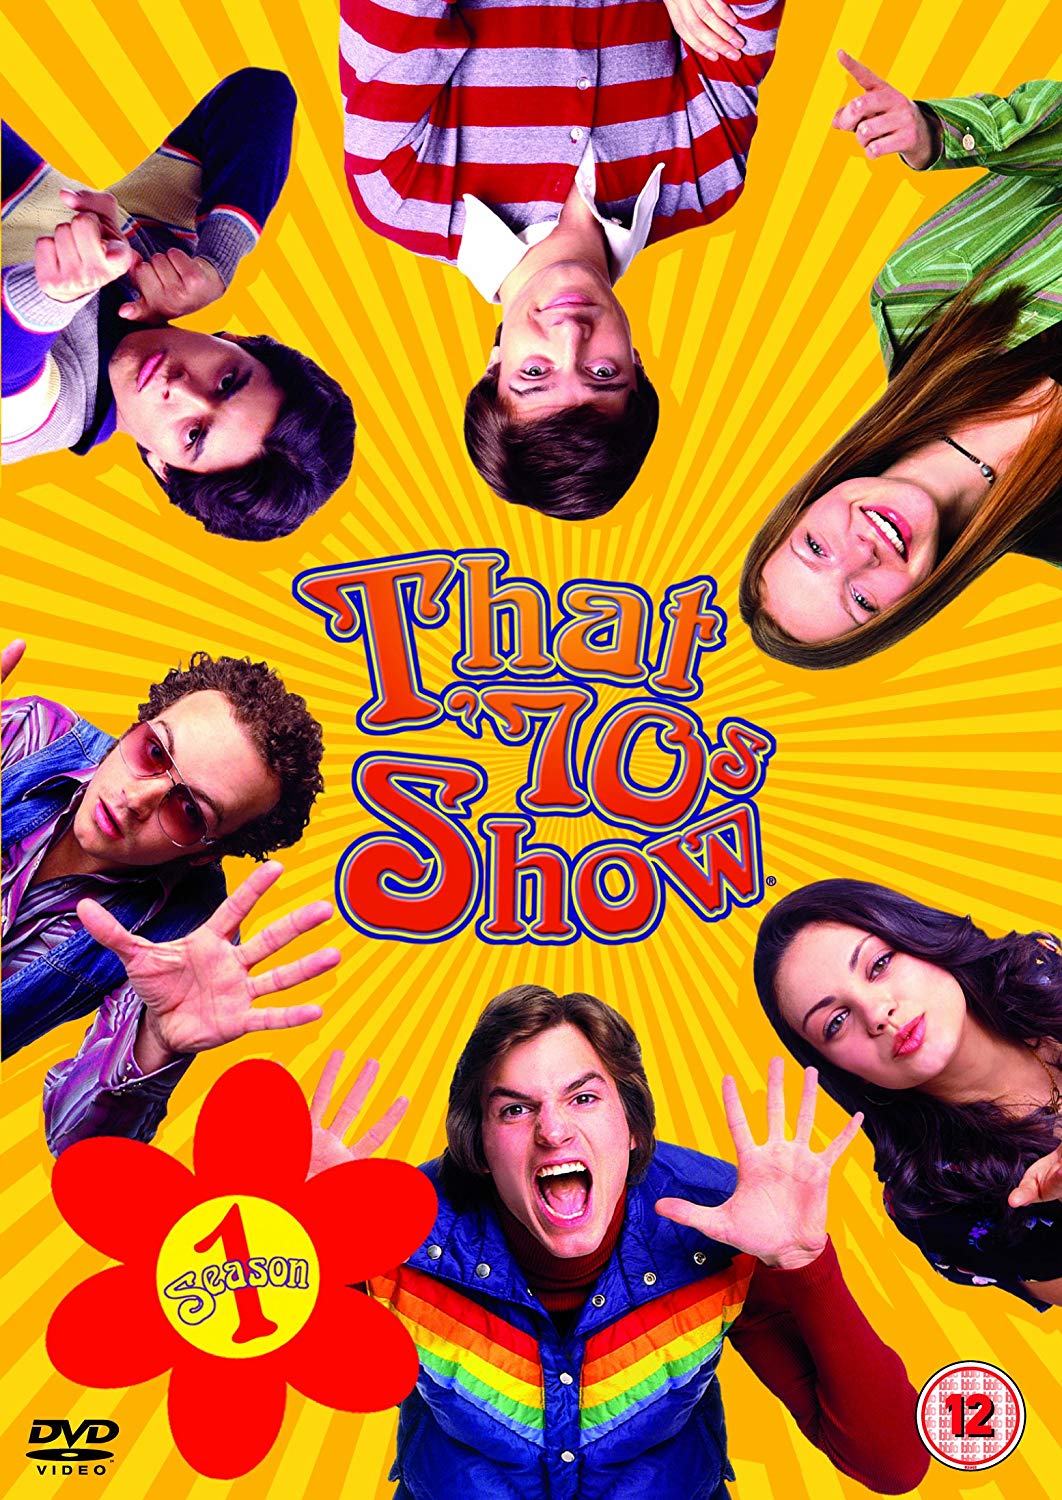 70s Show Season 1 Poster 1062x1500 Wallpaper teahub.io